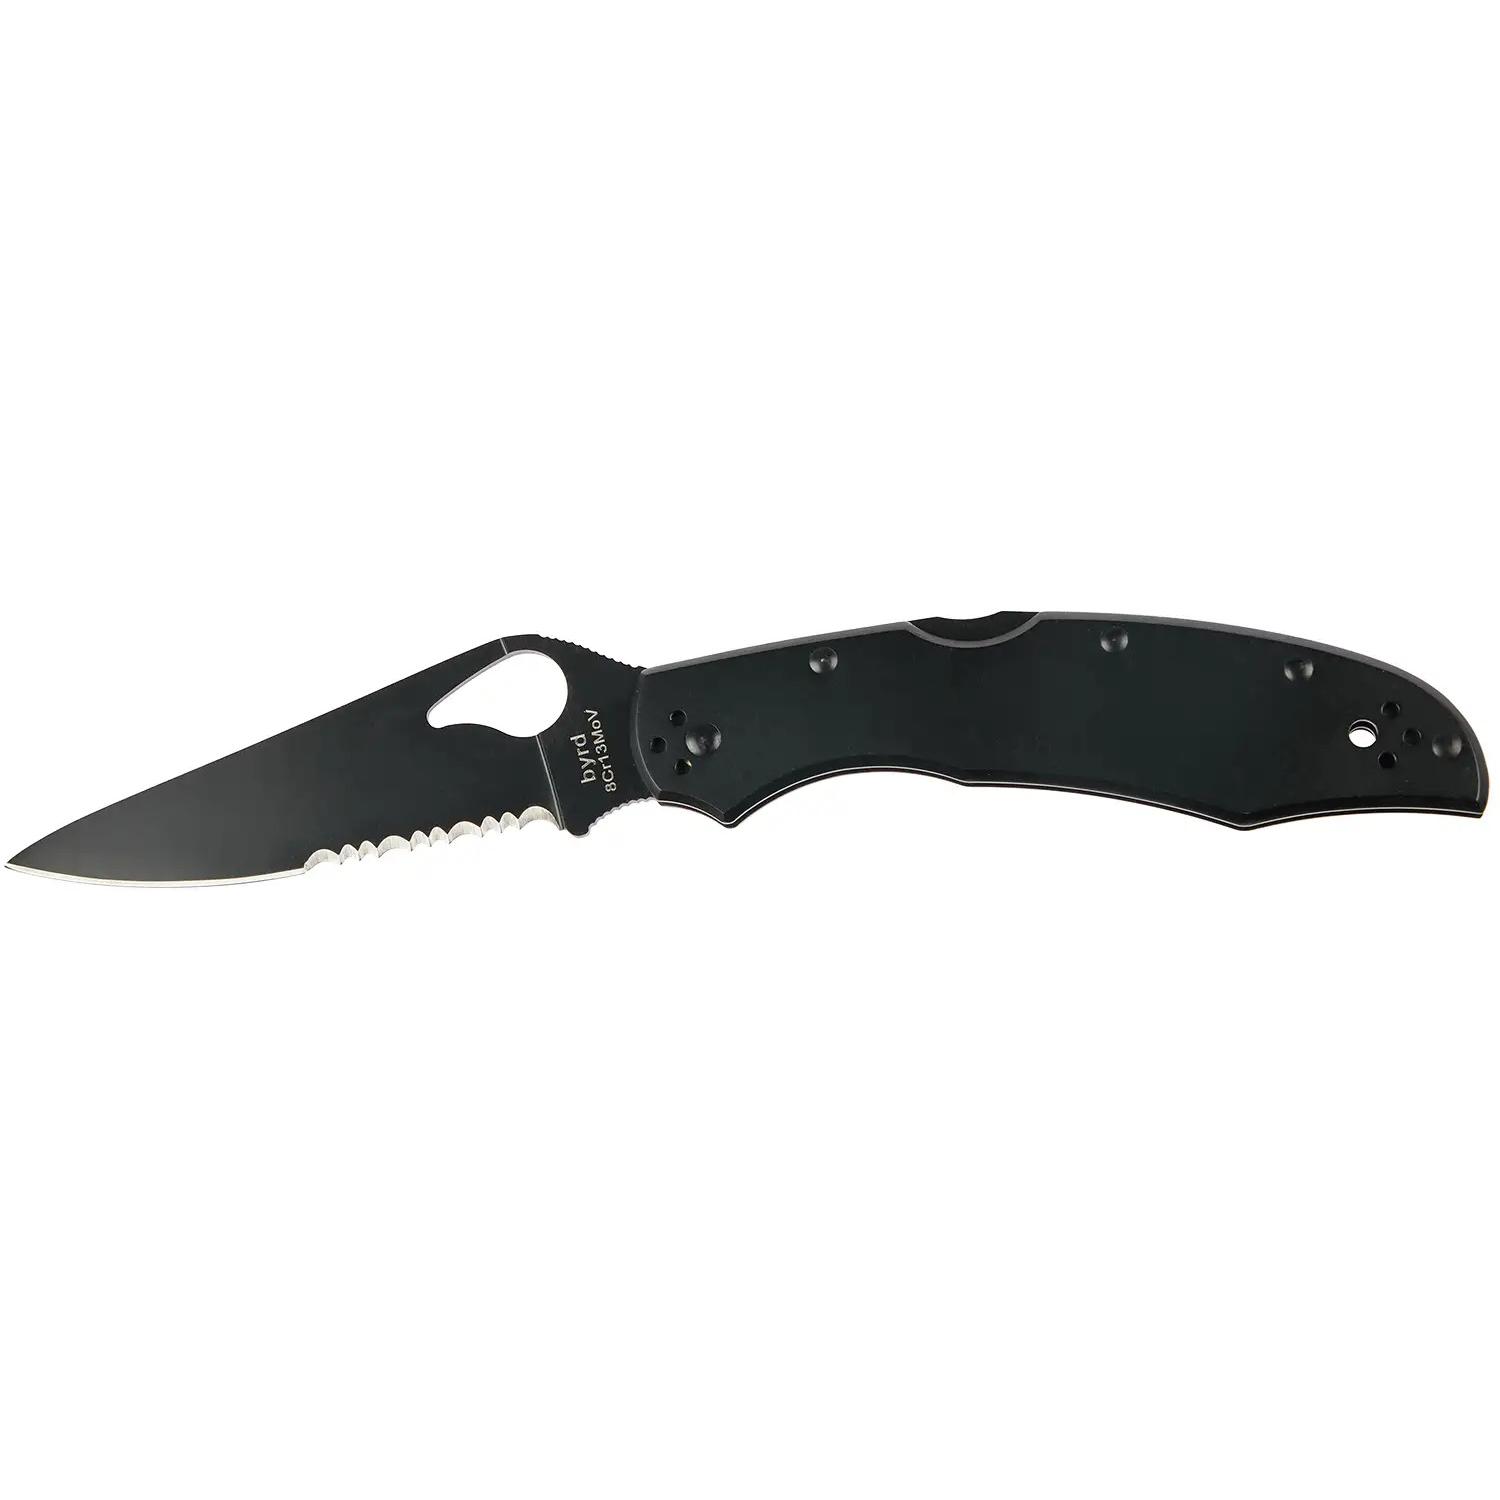 Нож Spyderco Byrd Cara Cara 2 Black BY03BKPS2 87.11.47